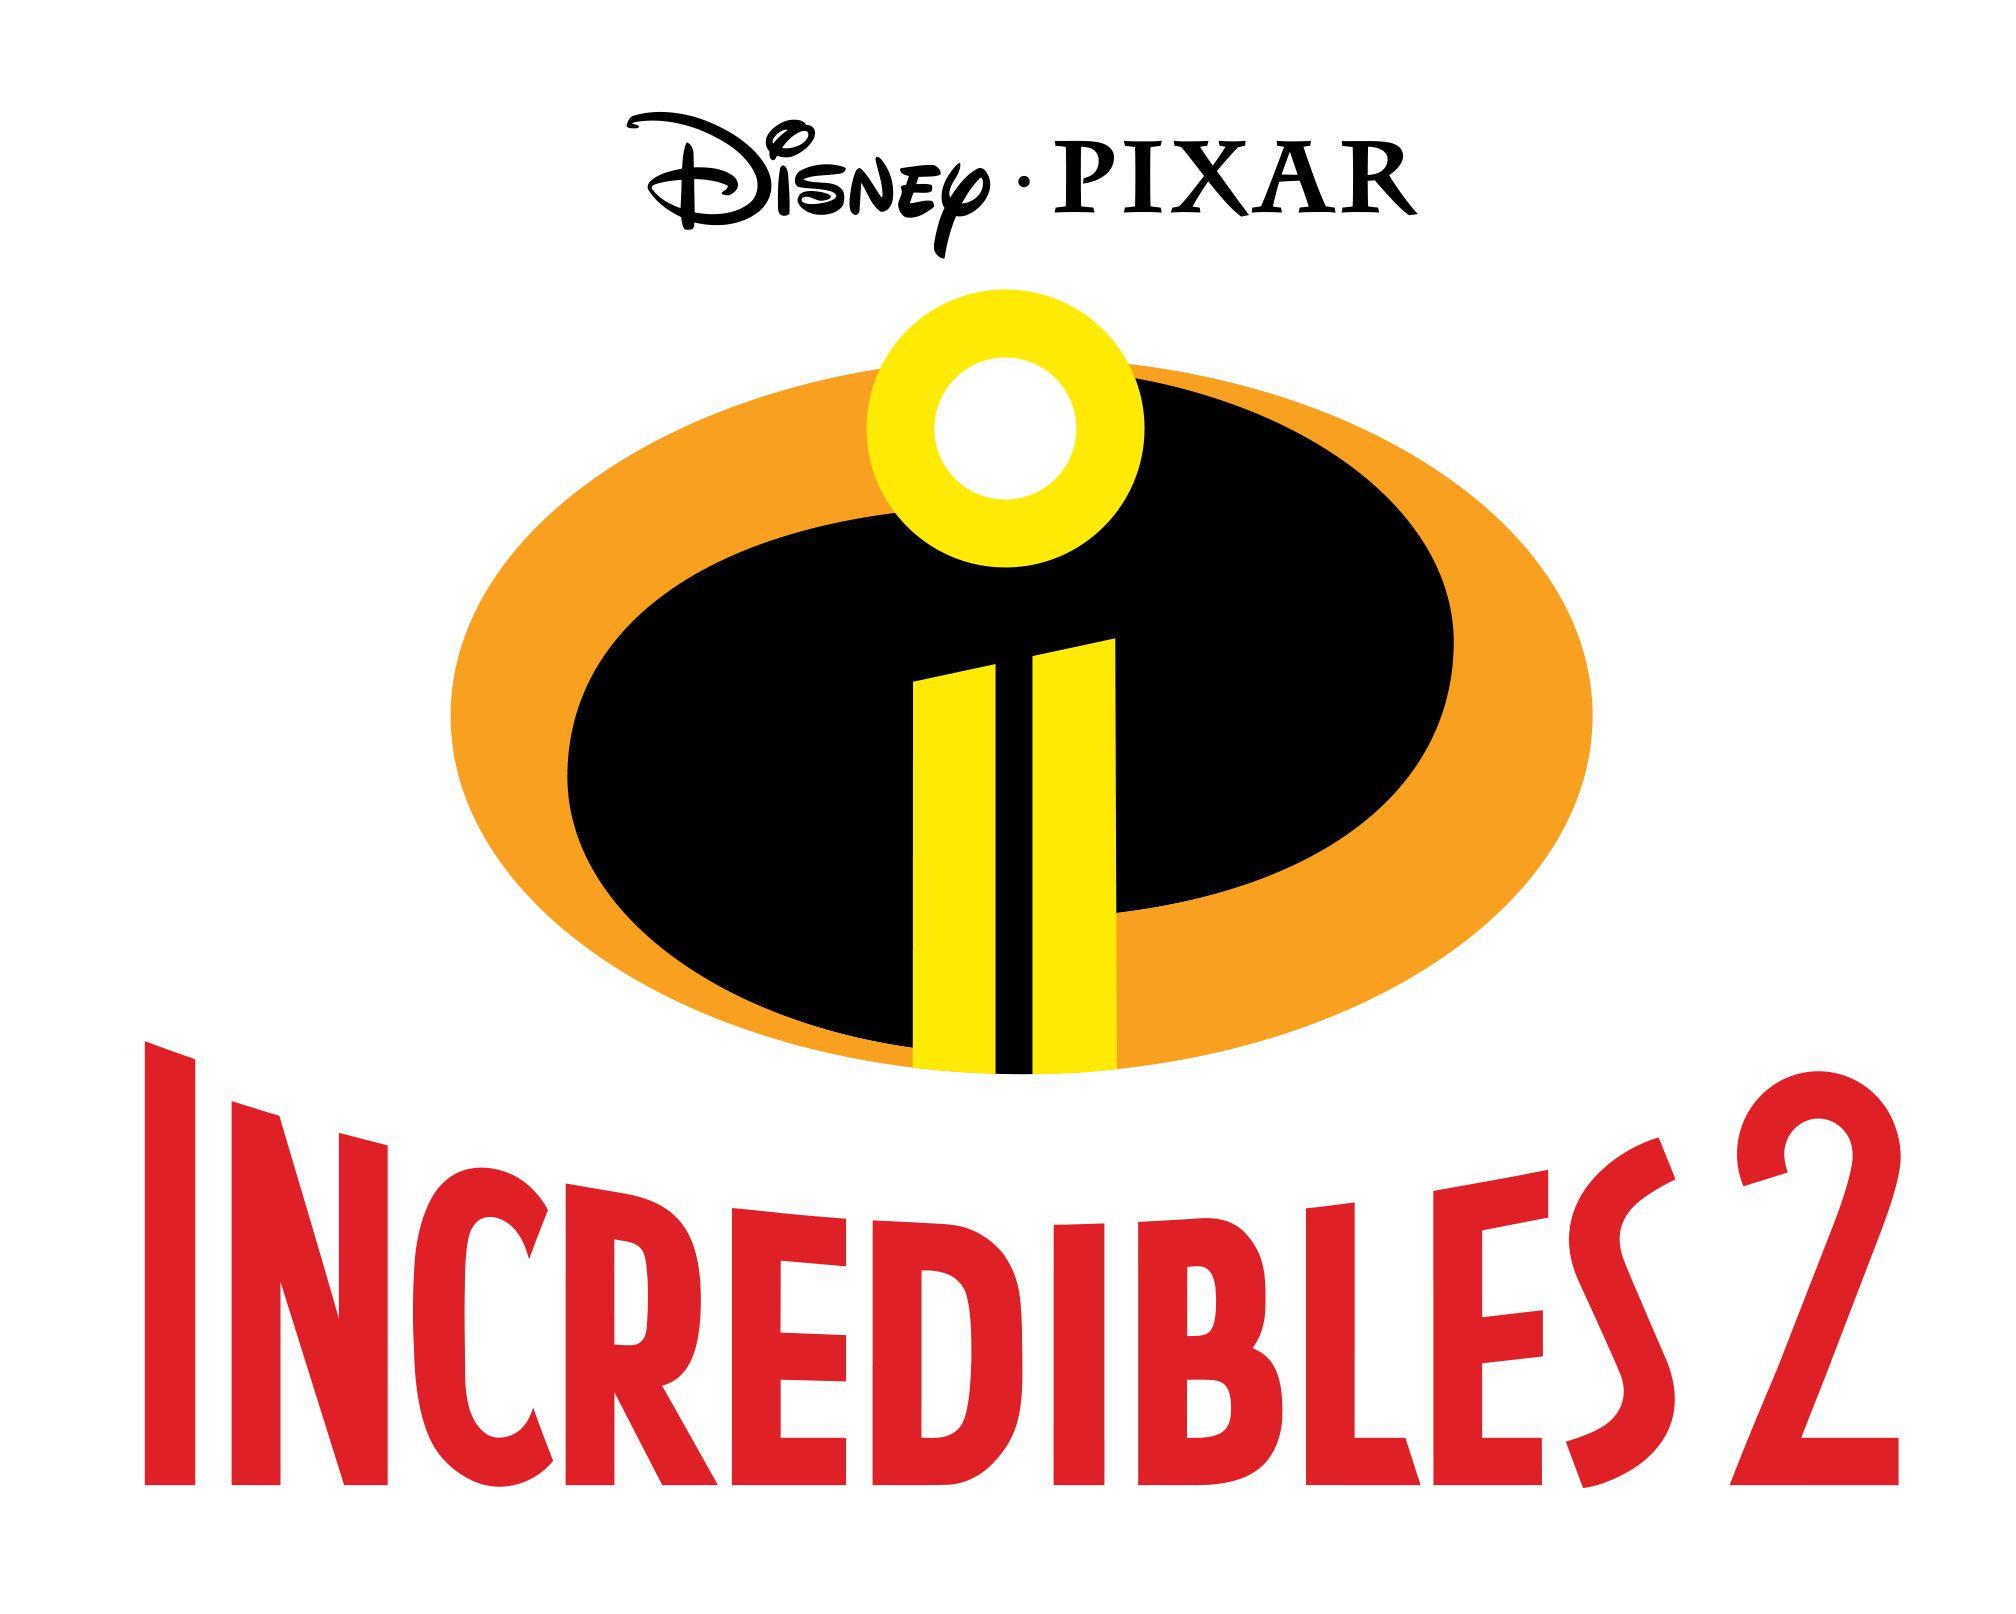 2 Disney Pixar Logo - Incredibles 2 Announces 14 Brand Partners for Promotions